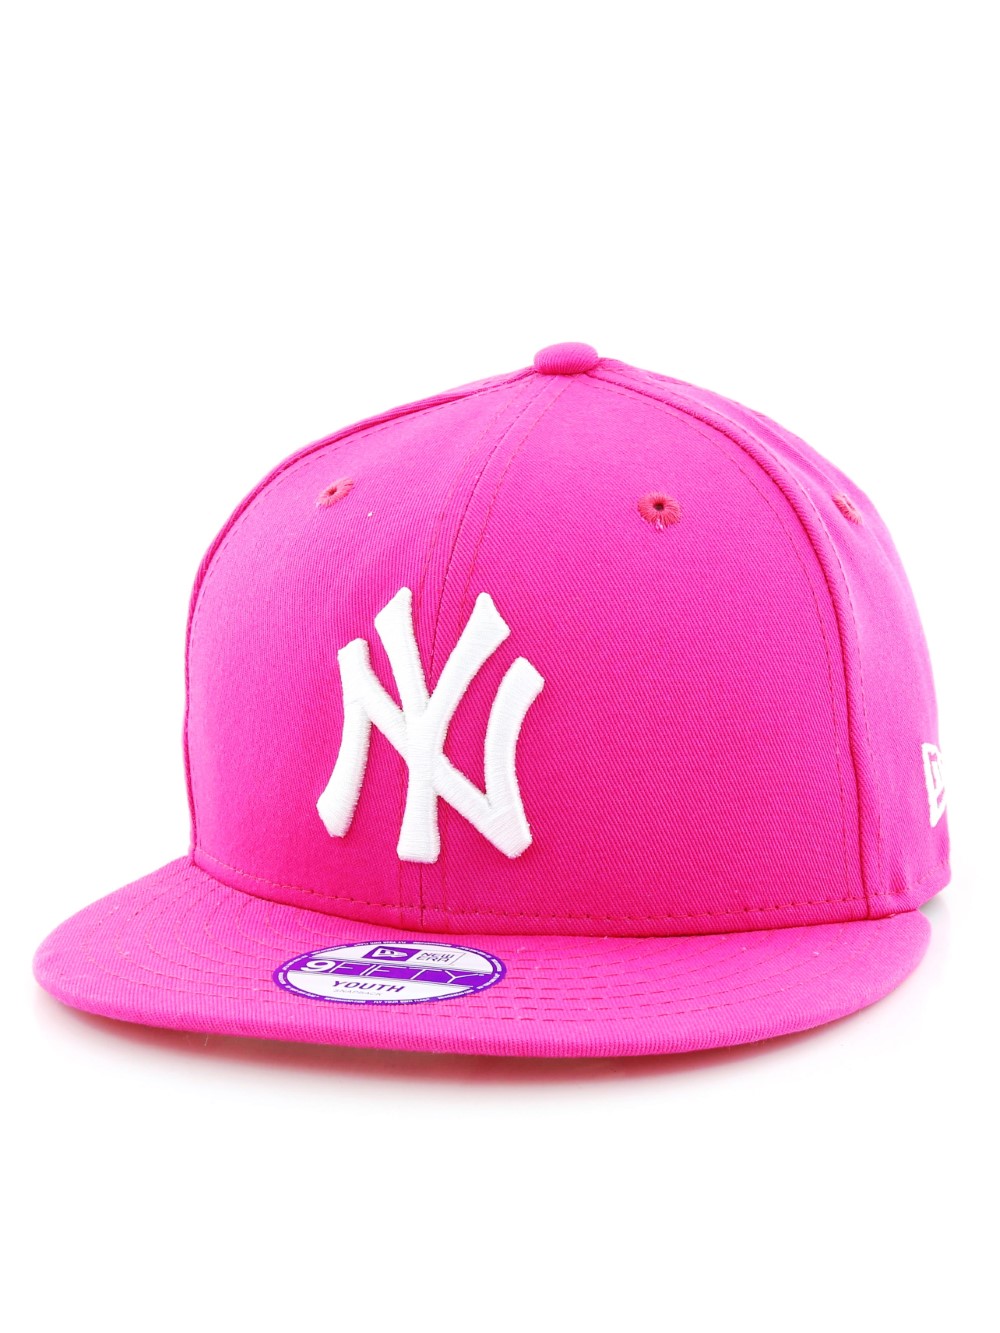 New Era MLB League Basic NY Yankees Youth Cap Pink